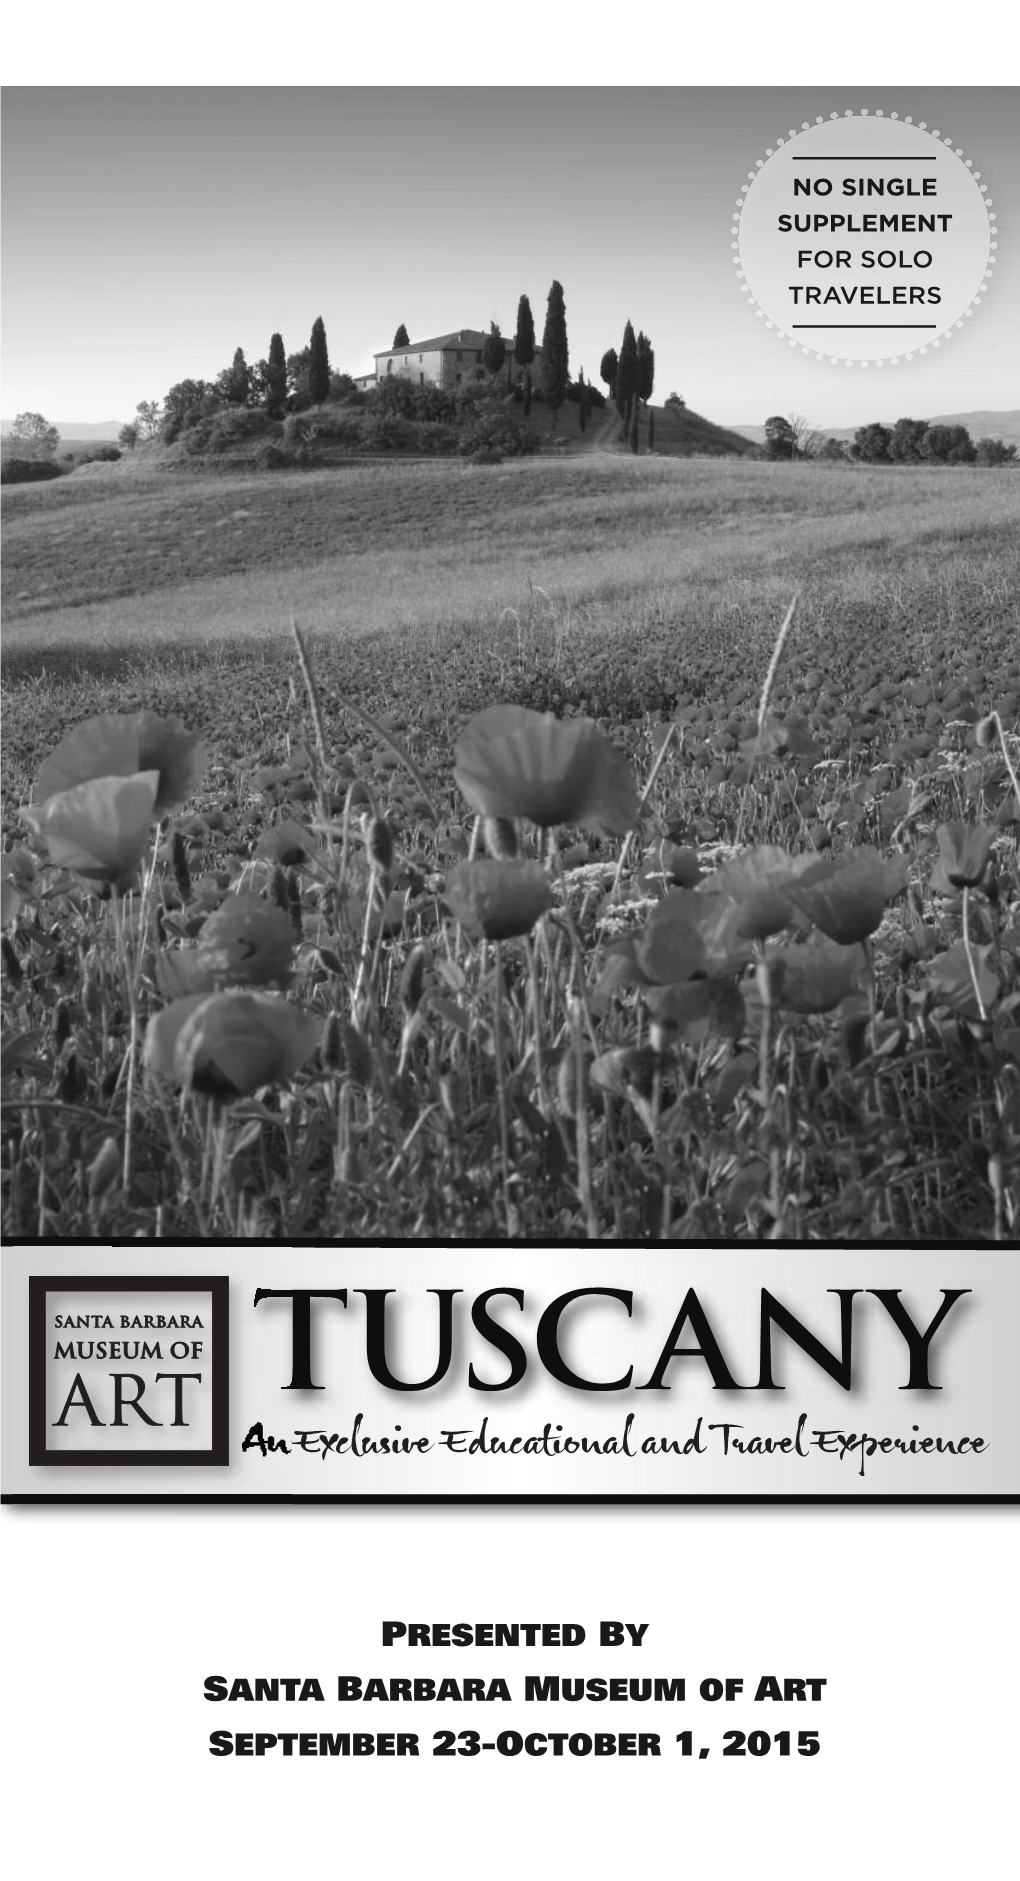 Tuscany Today! Trip #:9-21750 LAND PROGRAM NO SINGLE Send To: Tuscany September 24-October 1, 2015 SUPPLEMENT Santa Barbara Museum of Art Paid Travel Program U.S